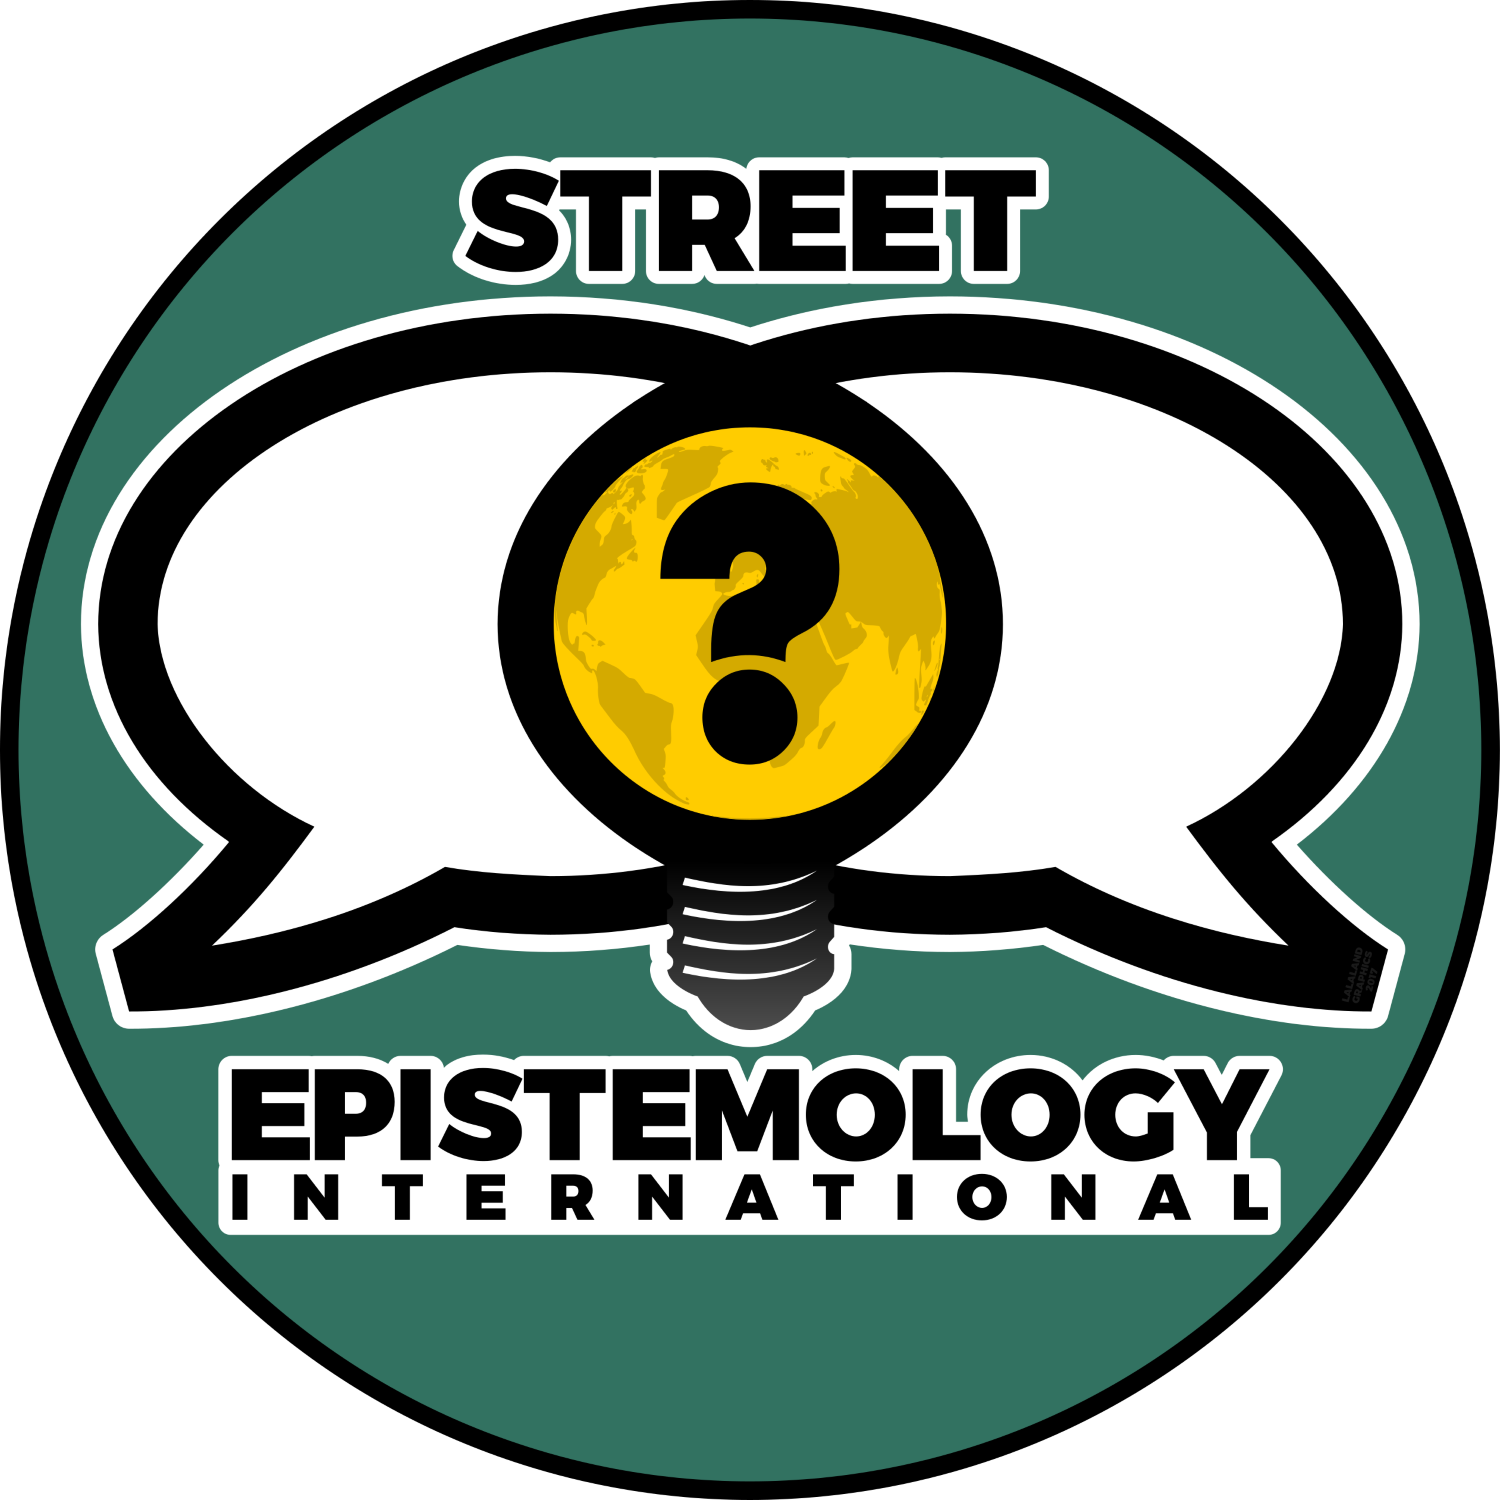 Street Epistemology International